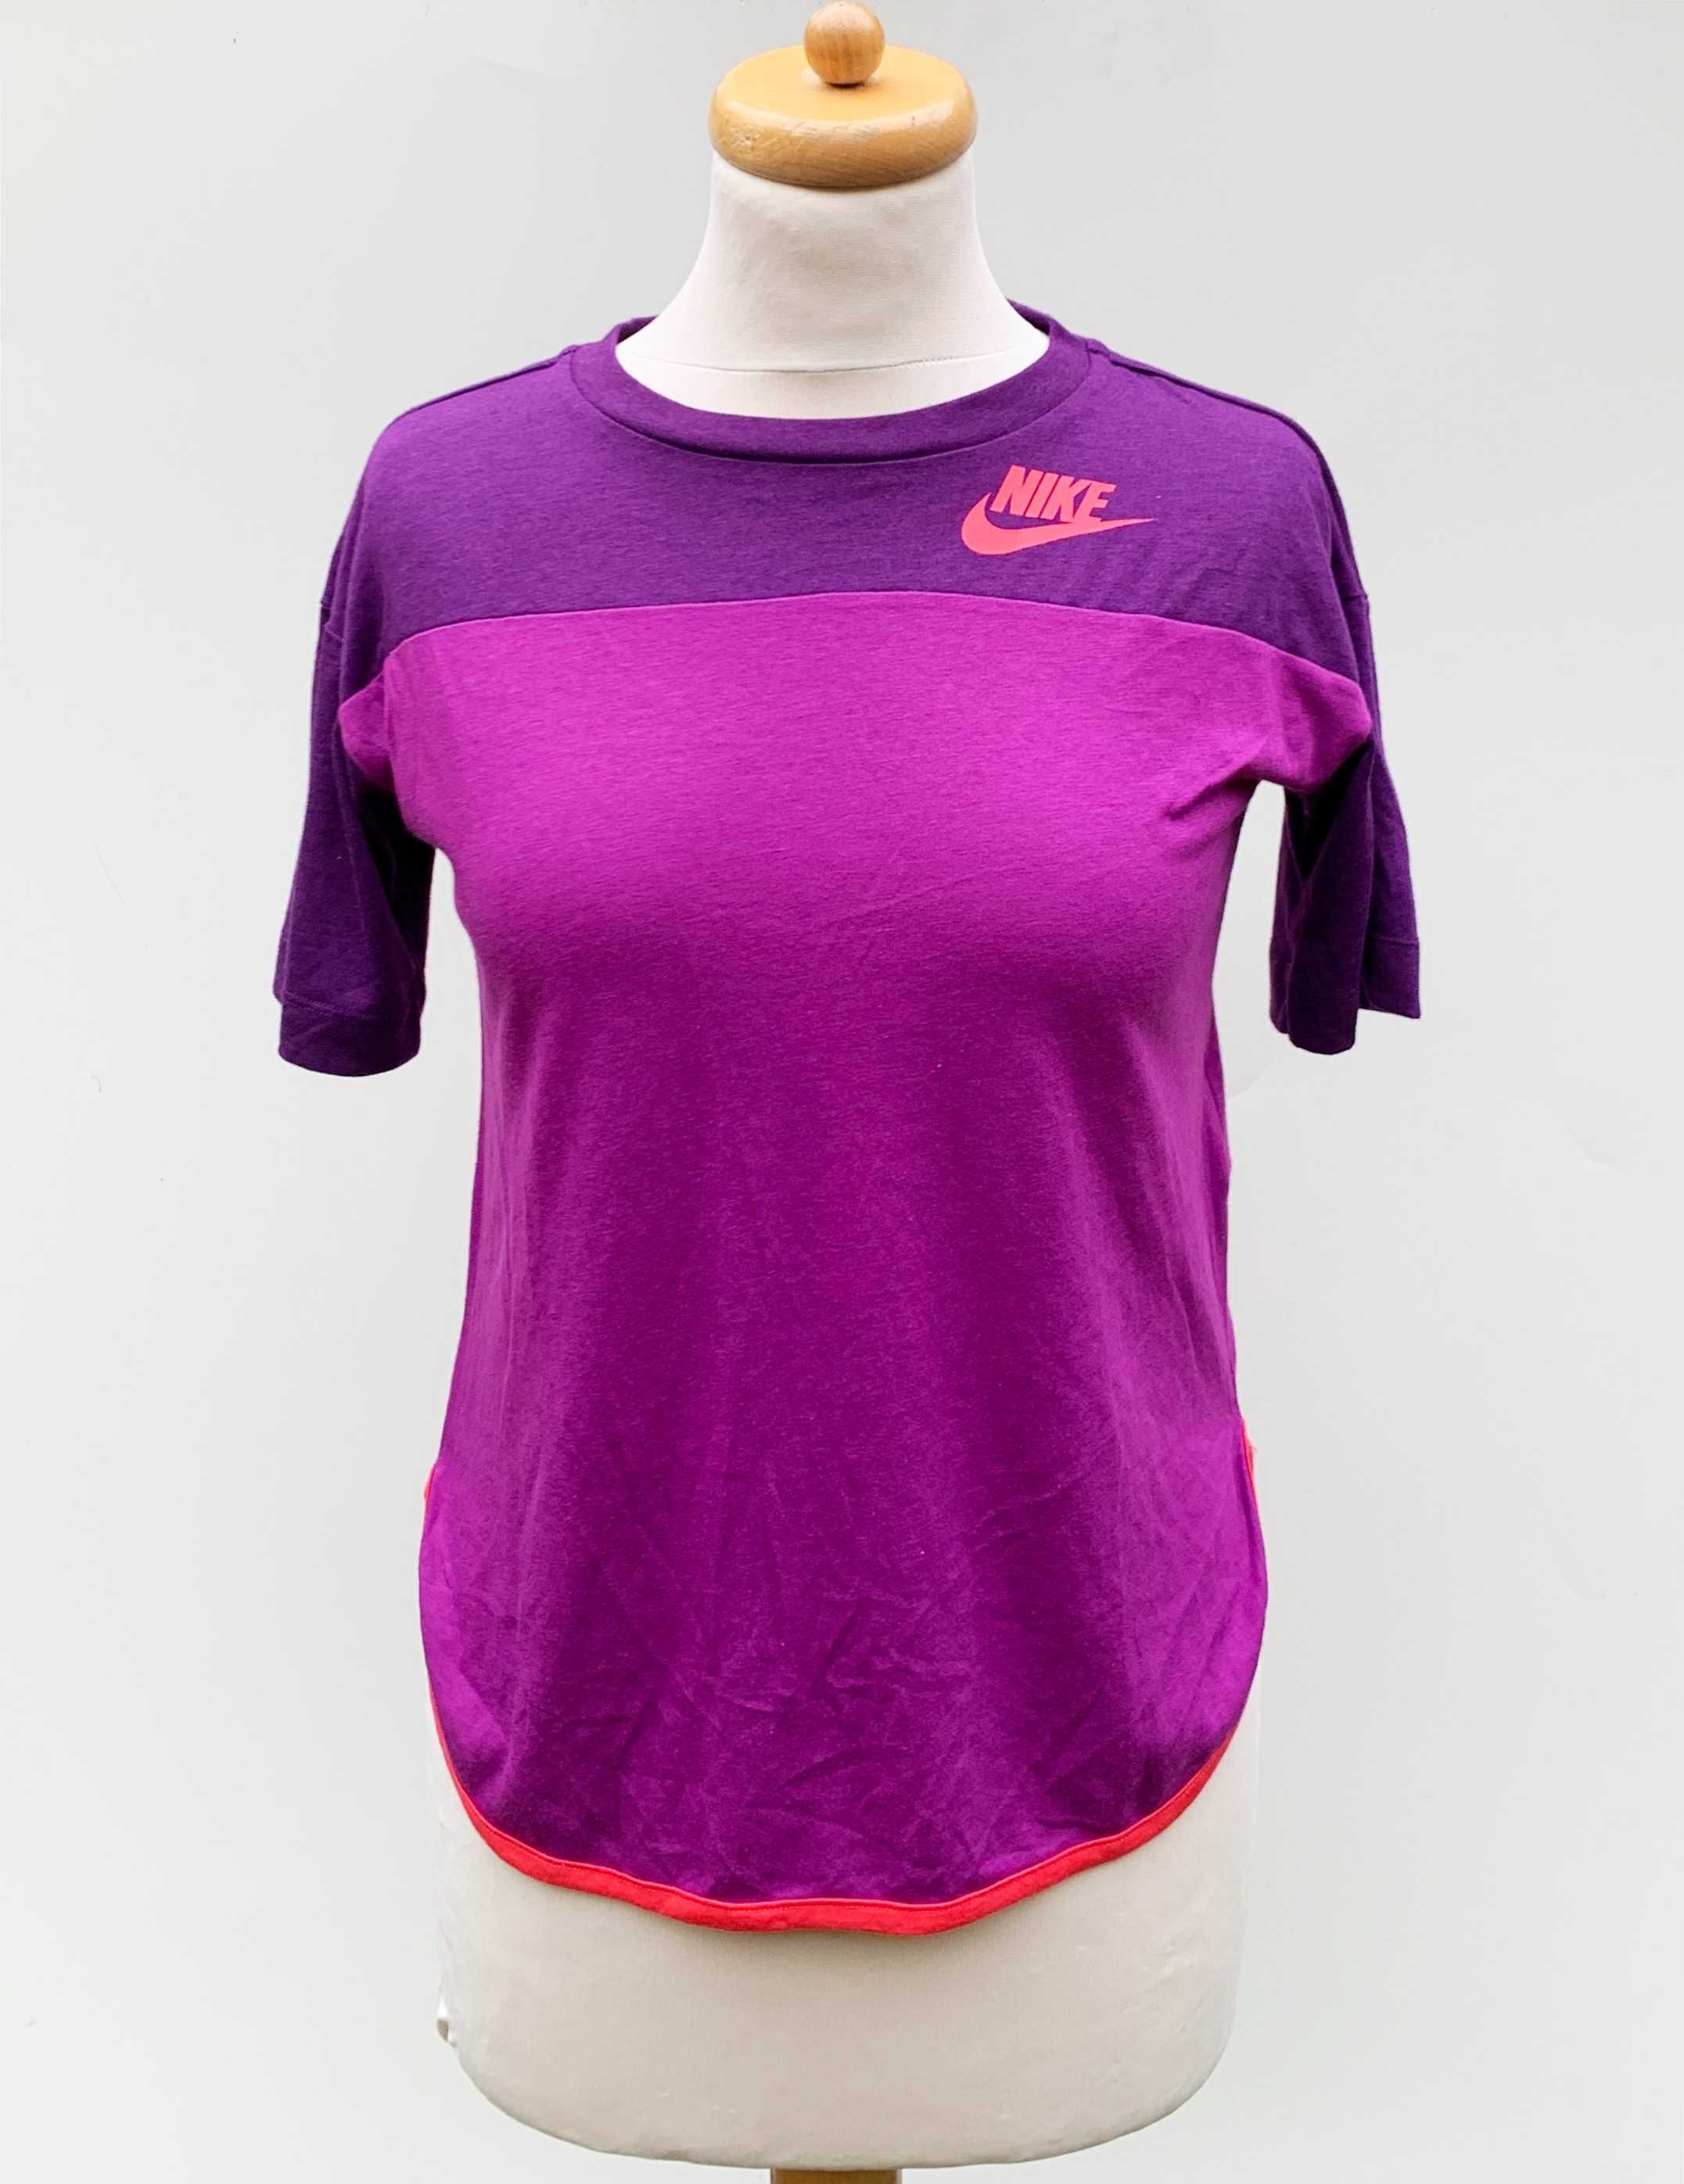 Bluzka Koszulka Nike Fioletowa Różowa L 146 156 cm 12 13 lat